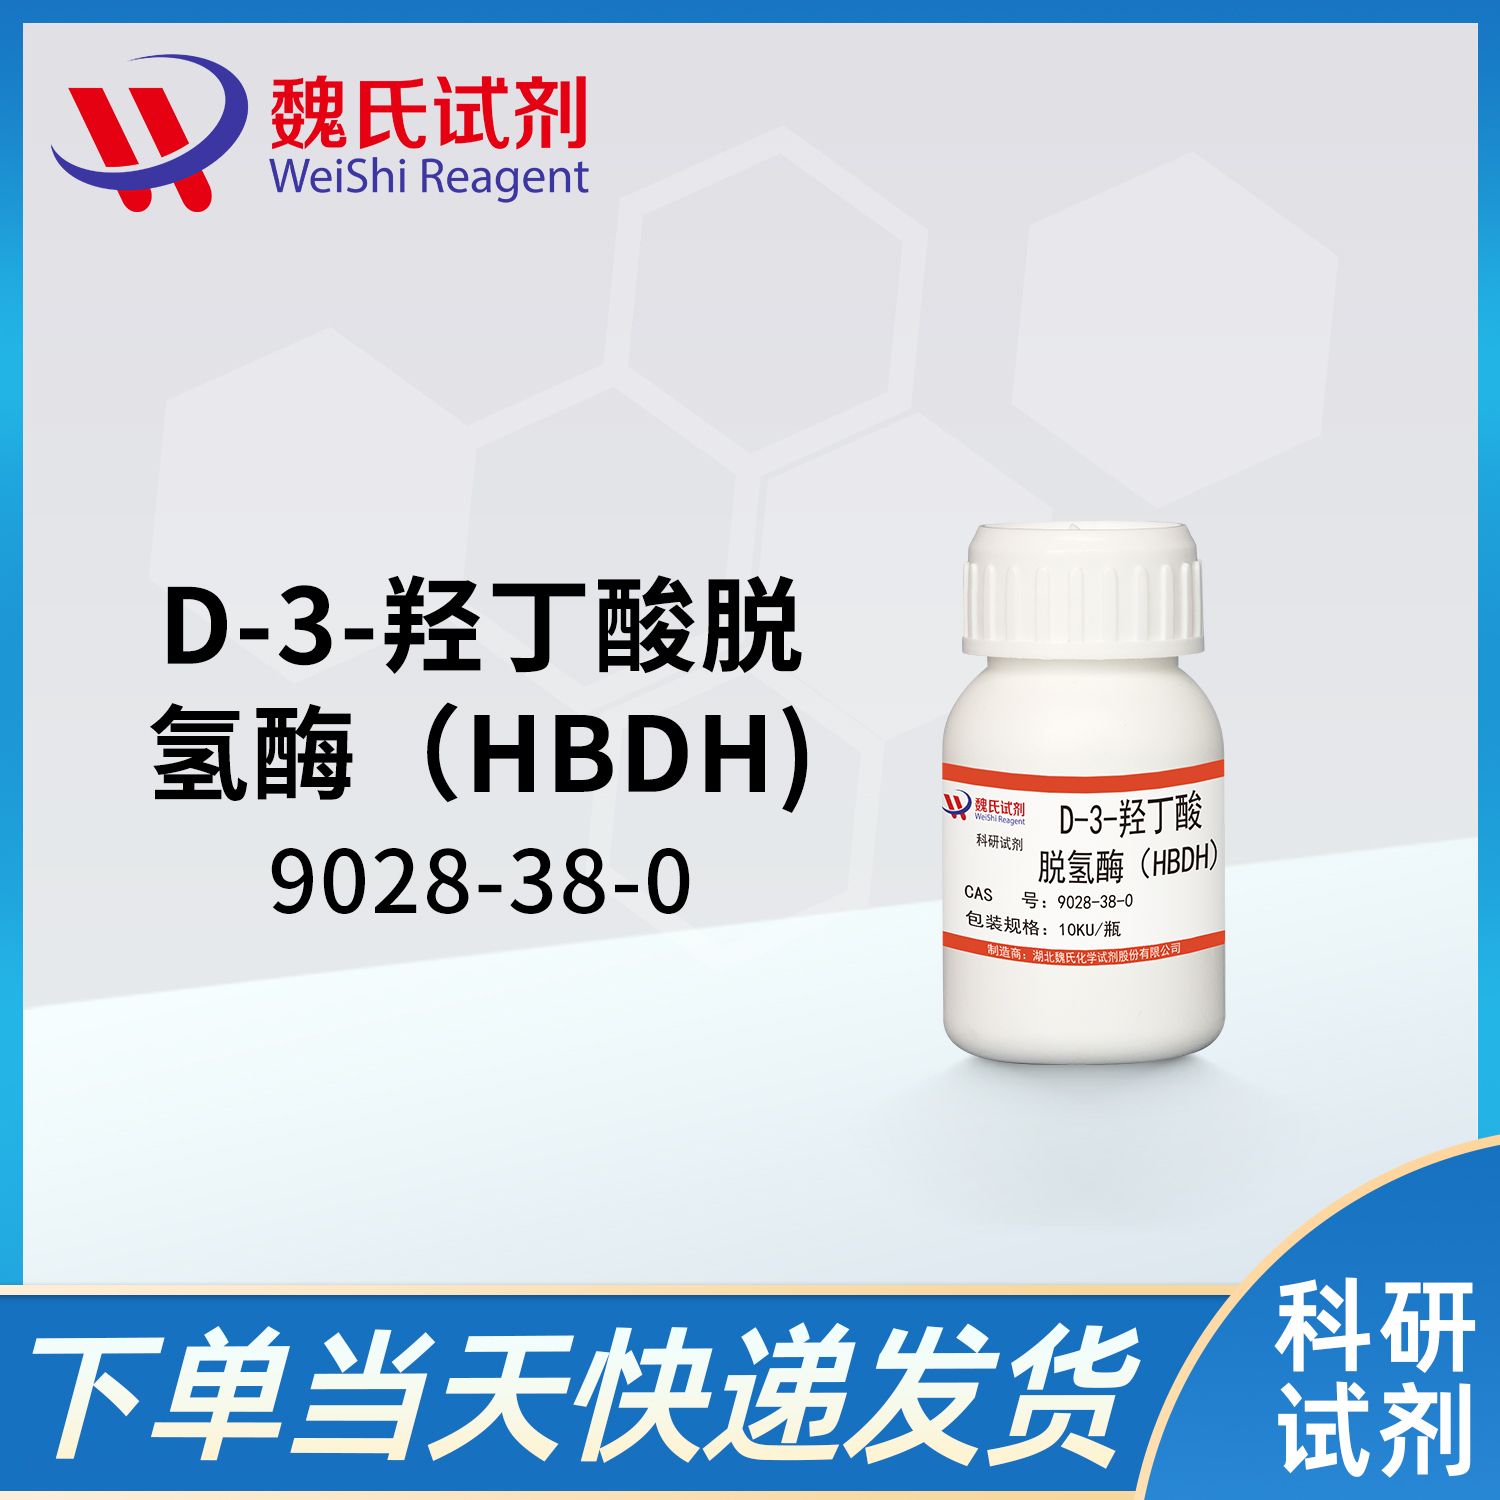 9028-38-0/D-3-羟丁酸脱氢酶（HBDH)/D-3-HYDROXYBUTYRATE DEHYDROGENASE